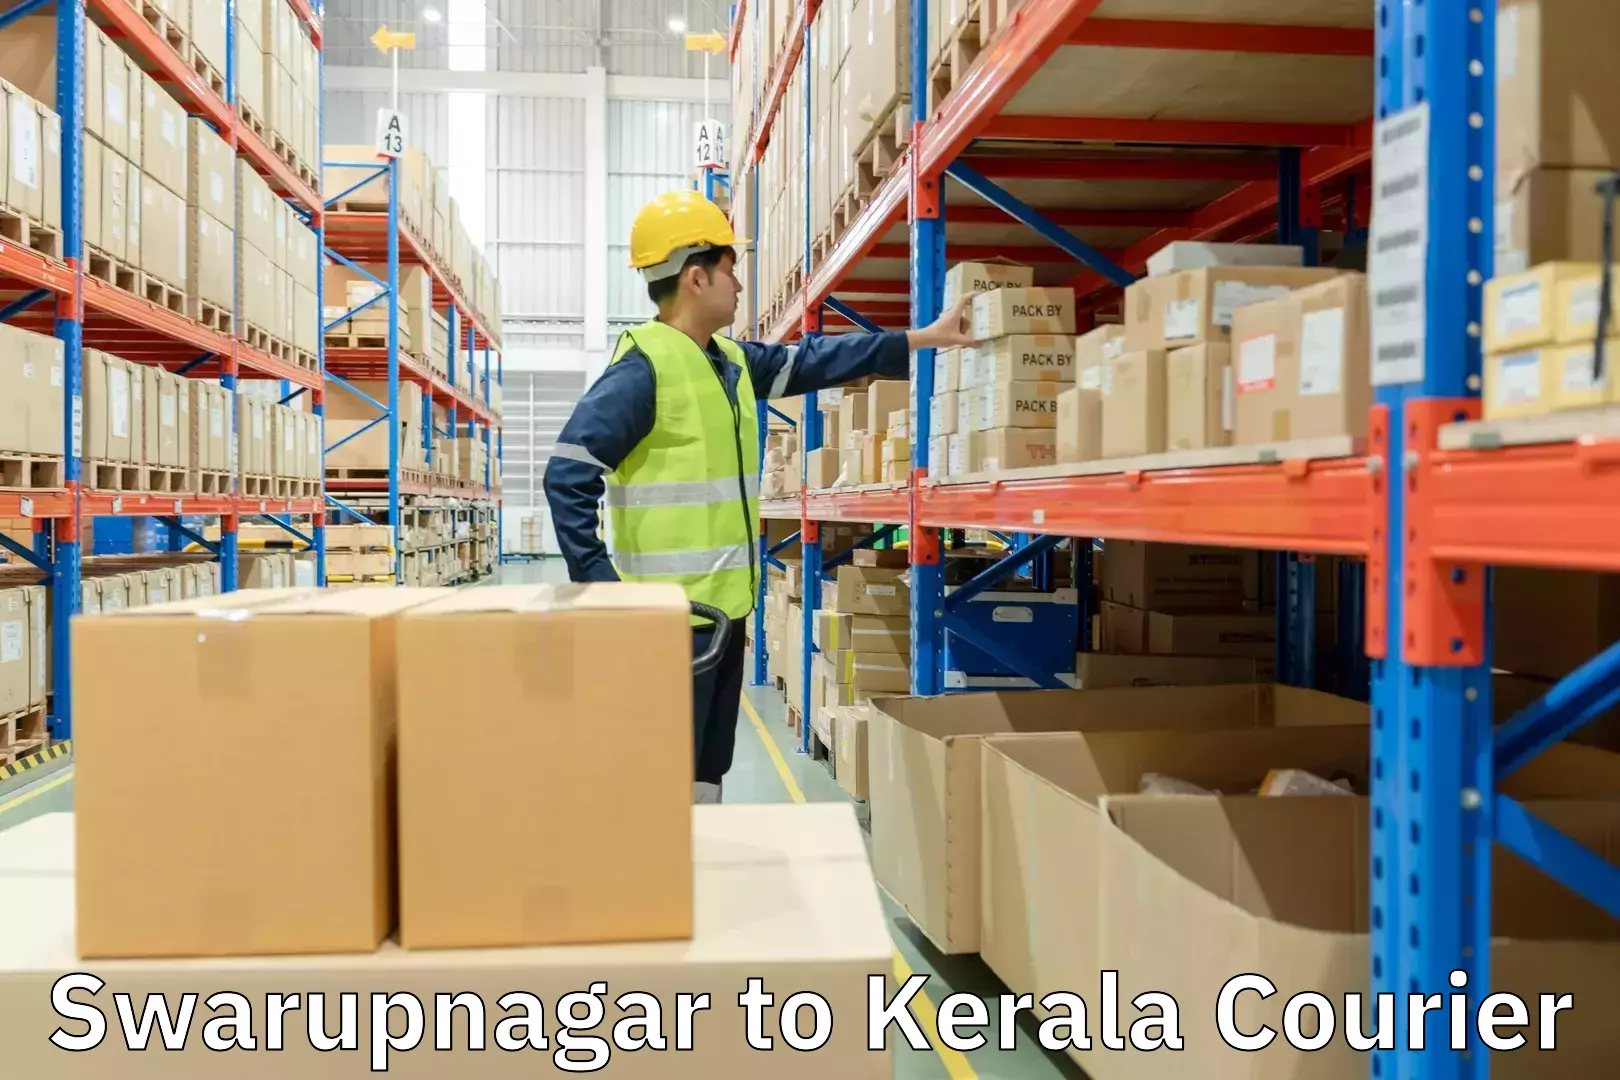 Courier service innovation Swarupnagar to Kerala